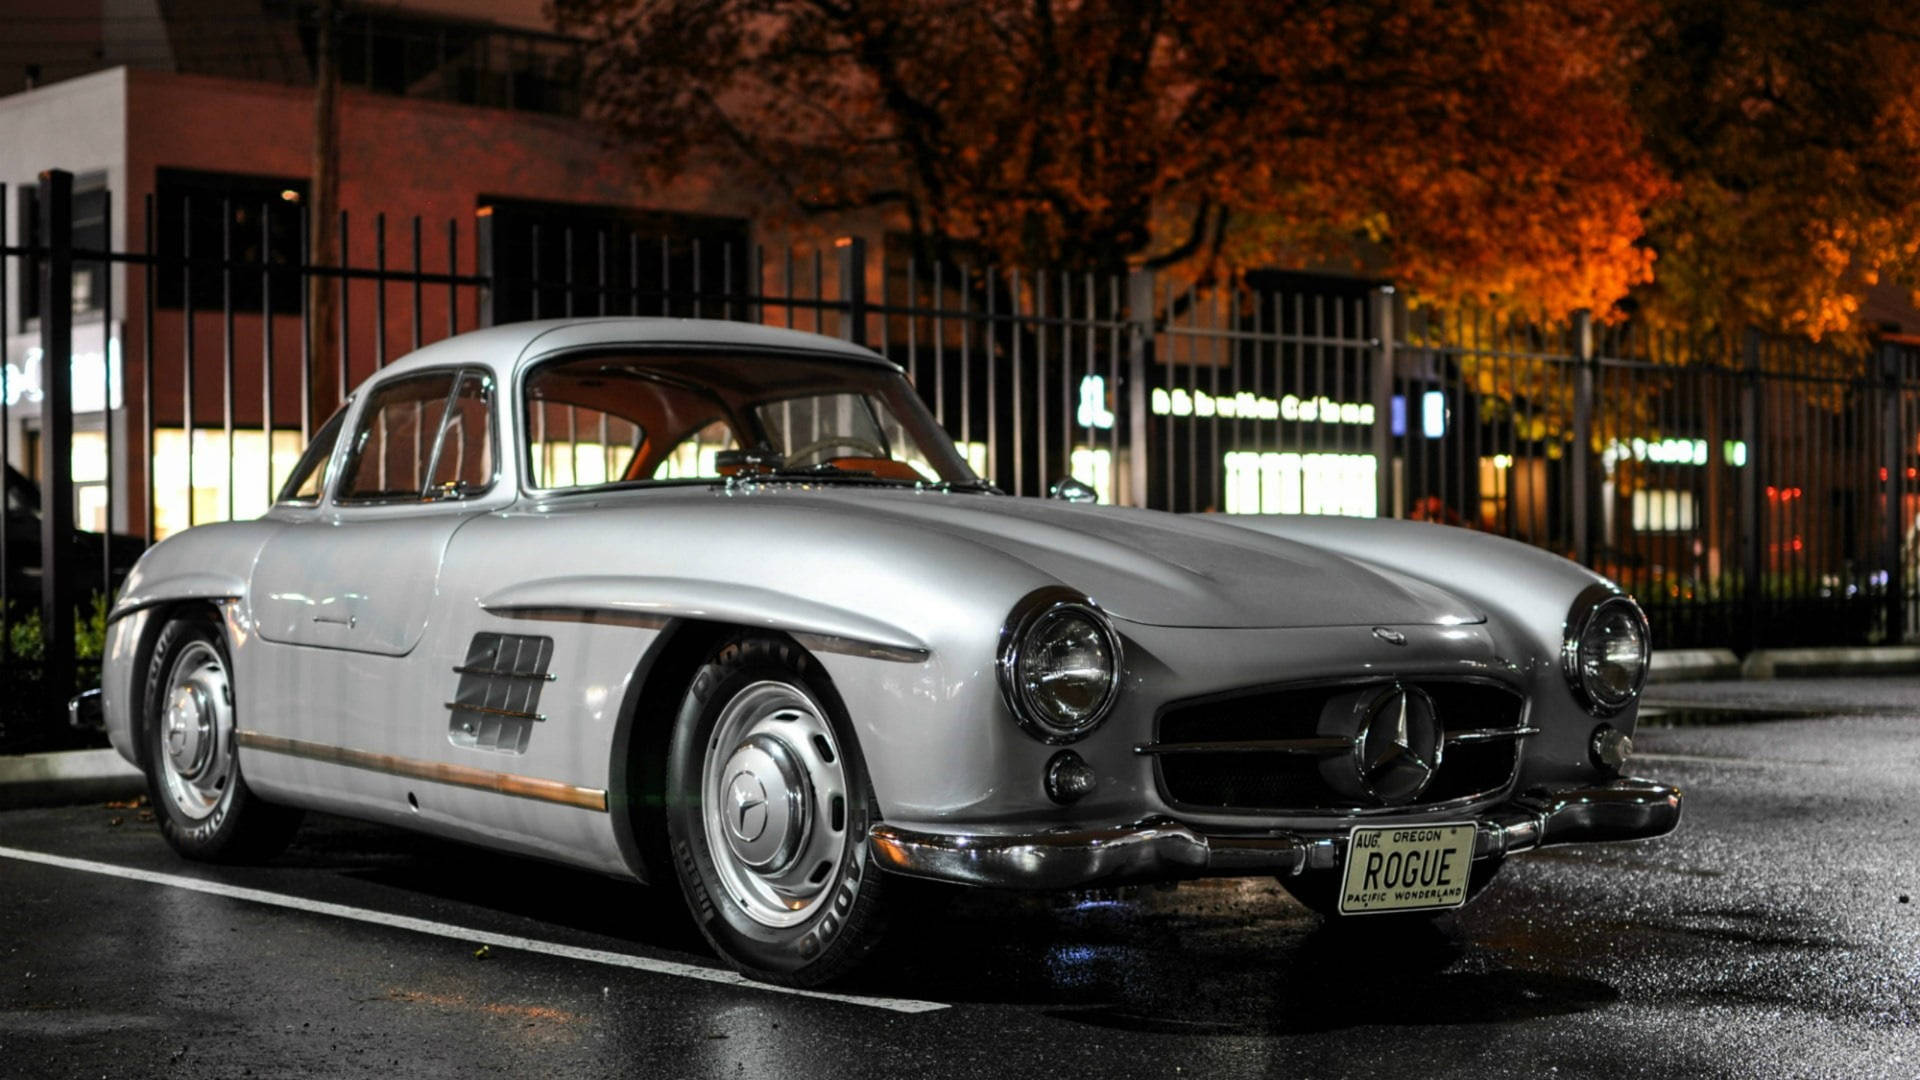 Silver Vintage Mercedes Benz Car